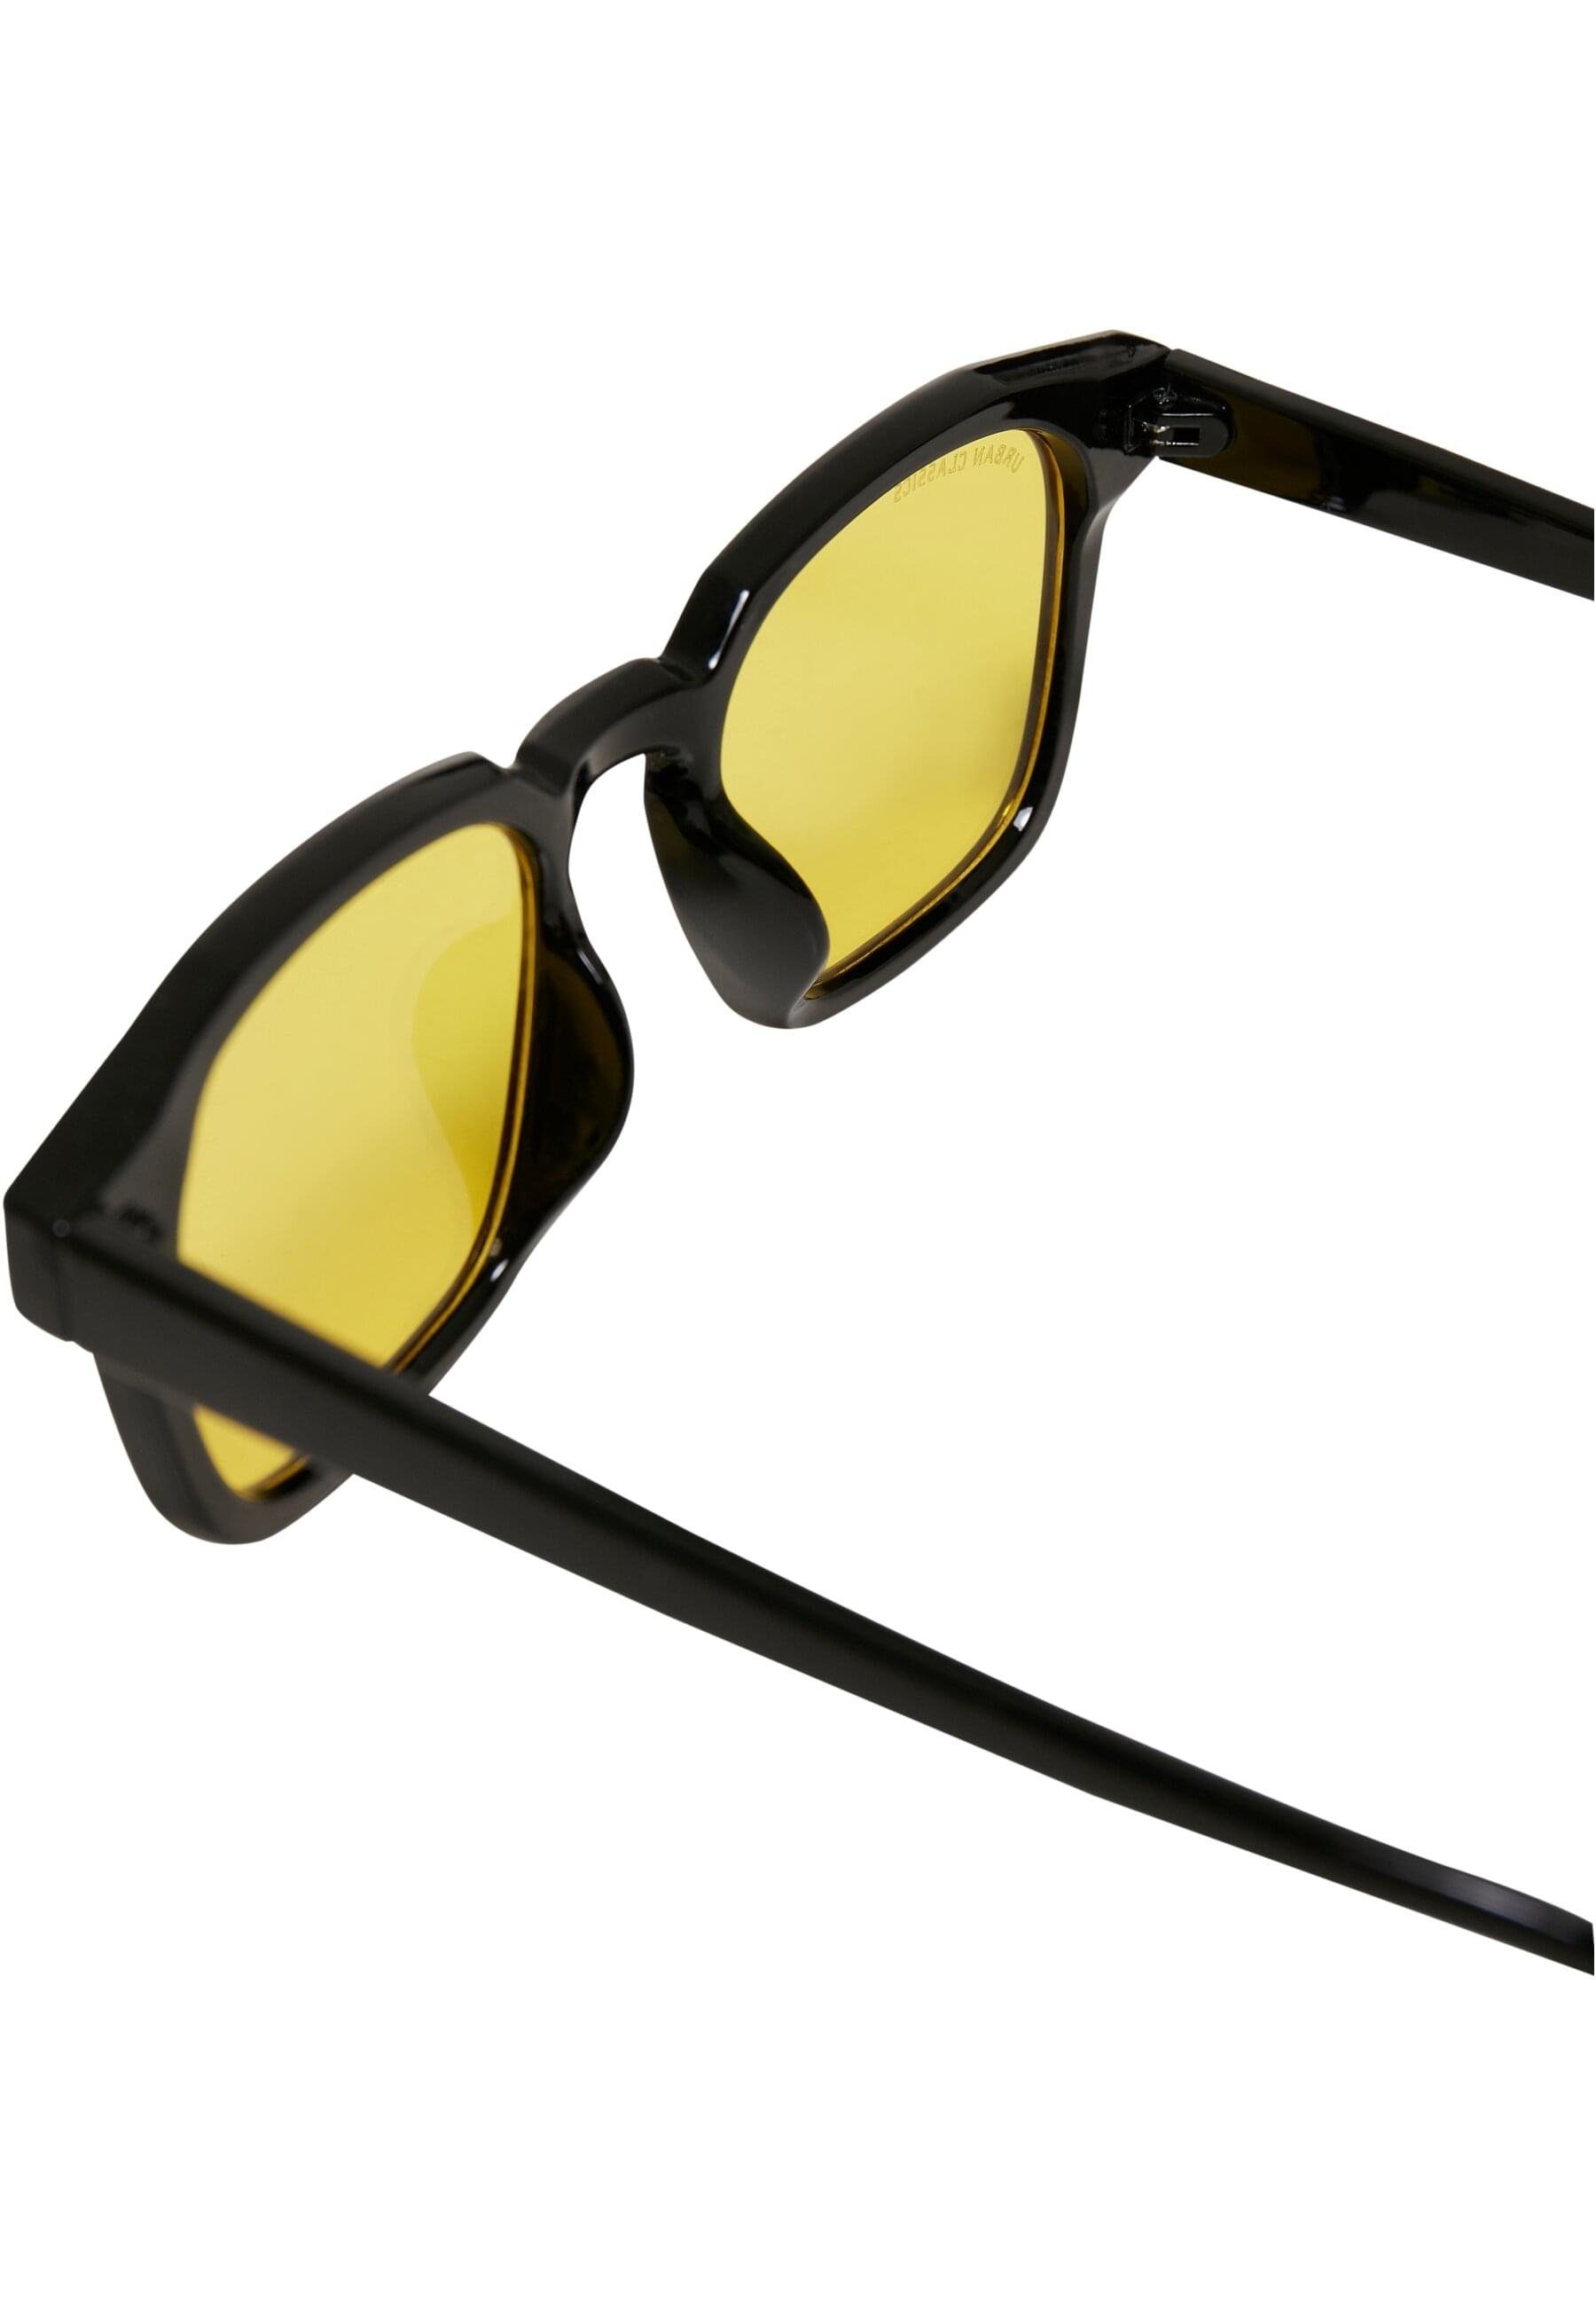 URBAN CLASSICS Sonnenbrille Unisex Sunglasses With Case black/yellow Maui